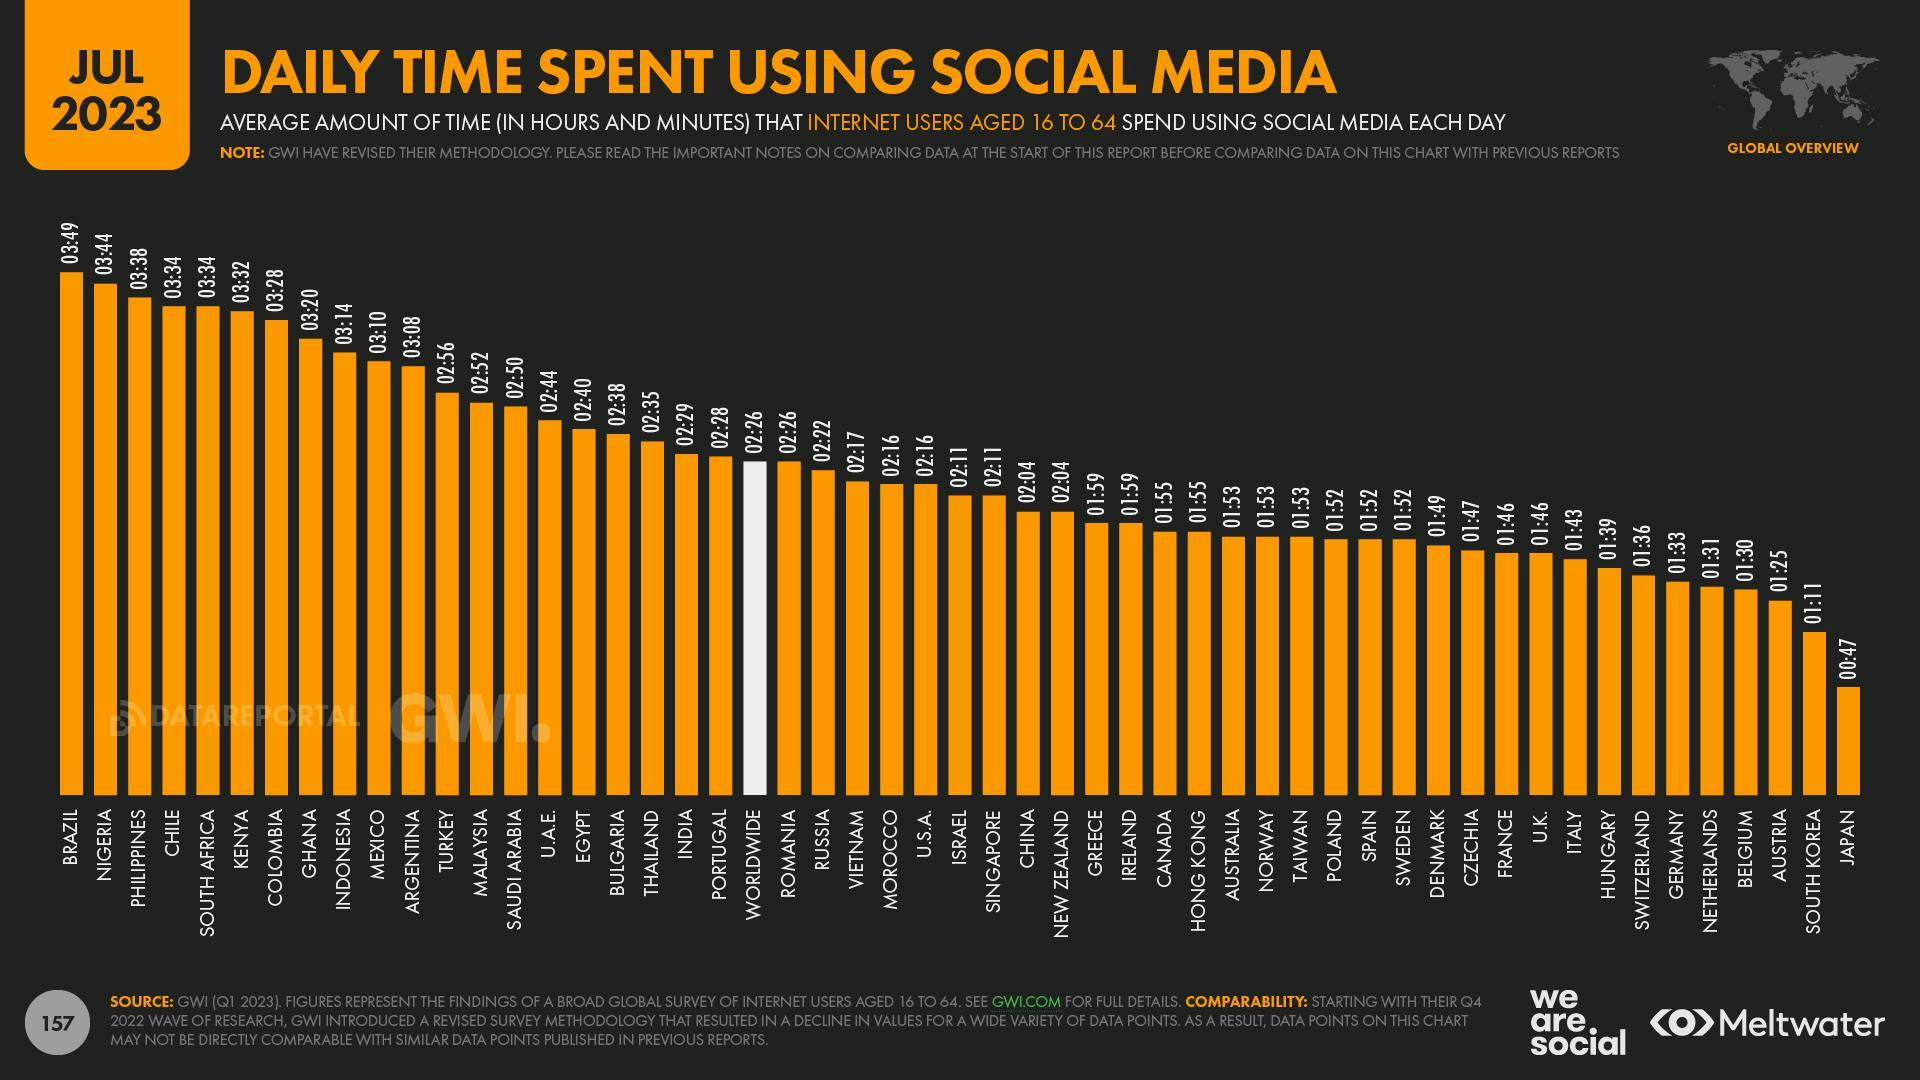 Social media time across countries